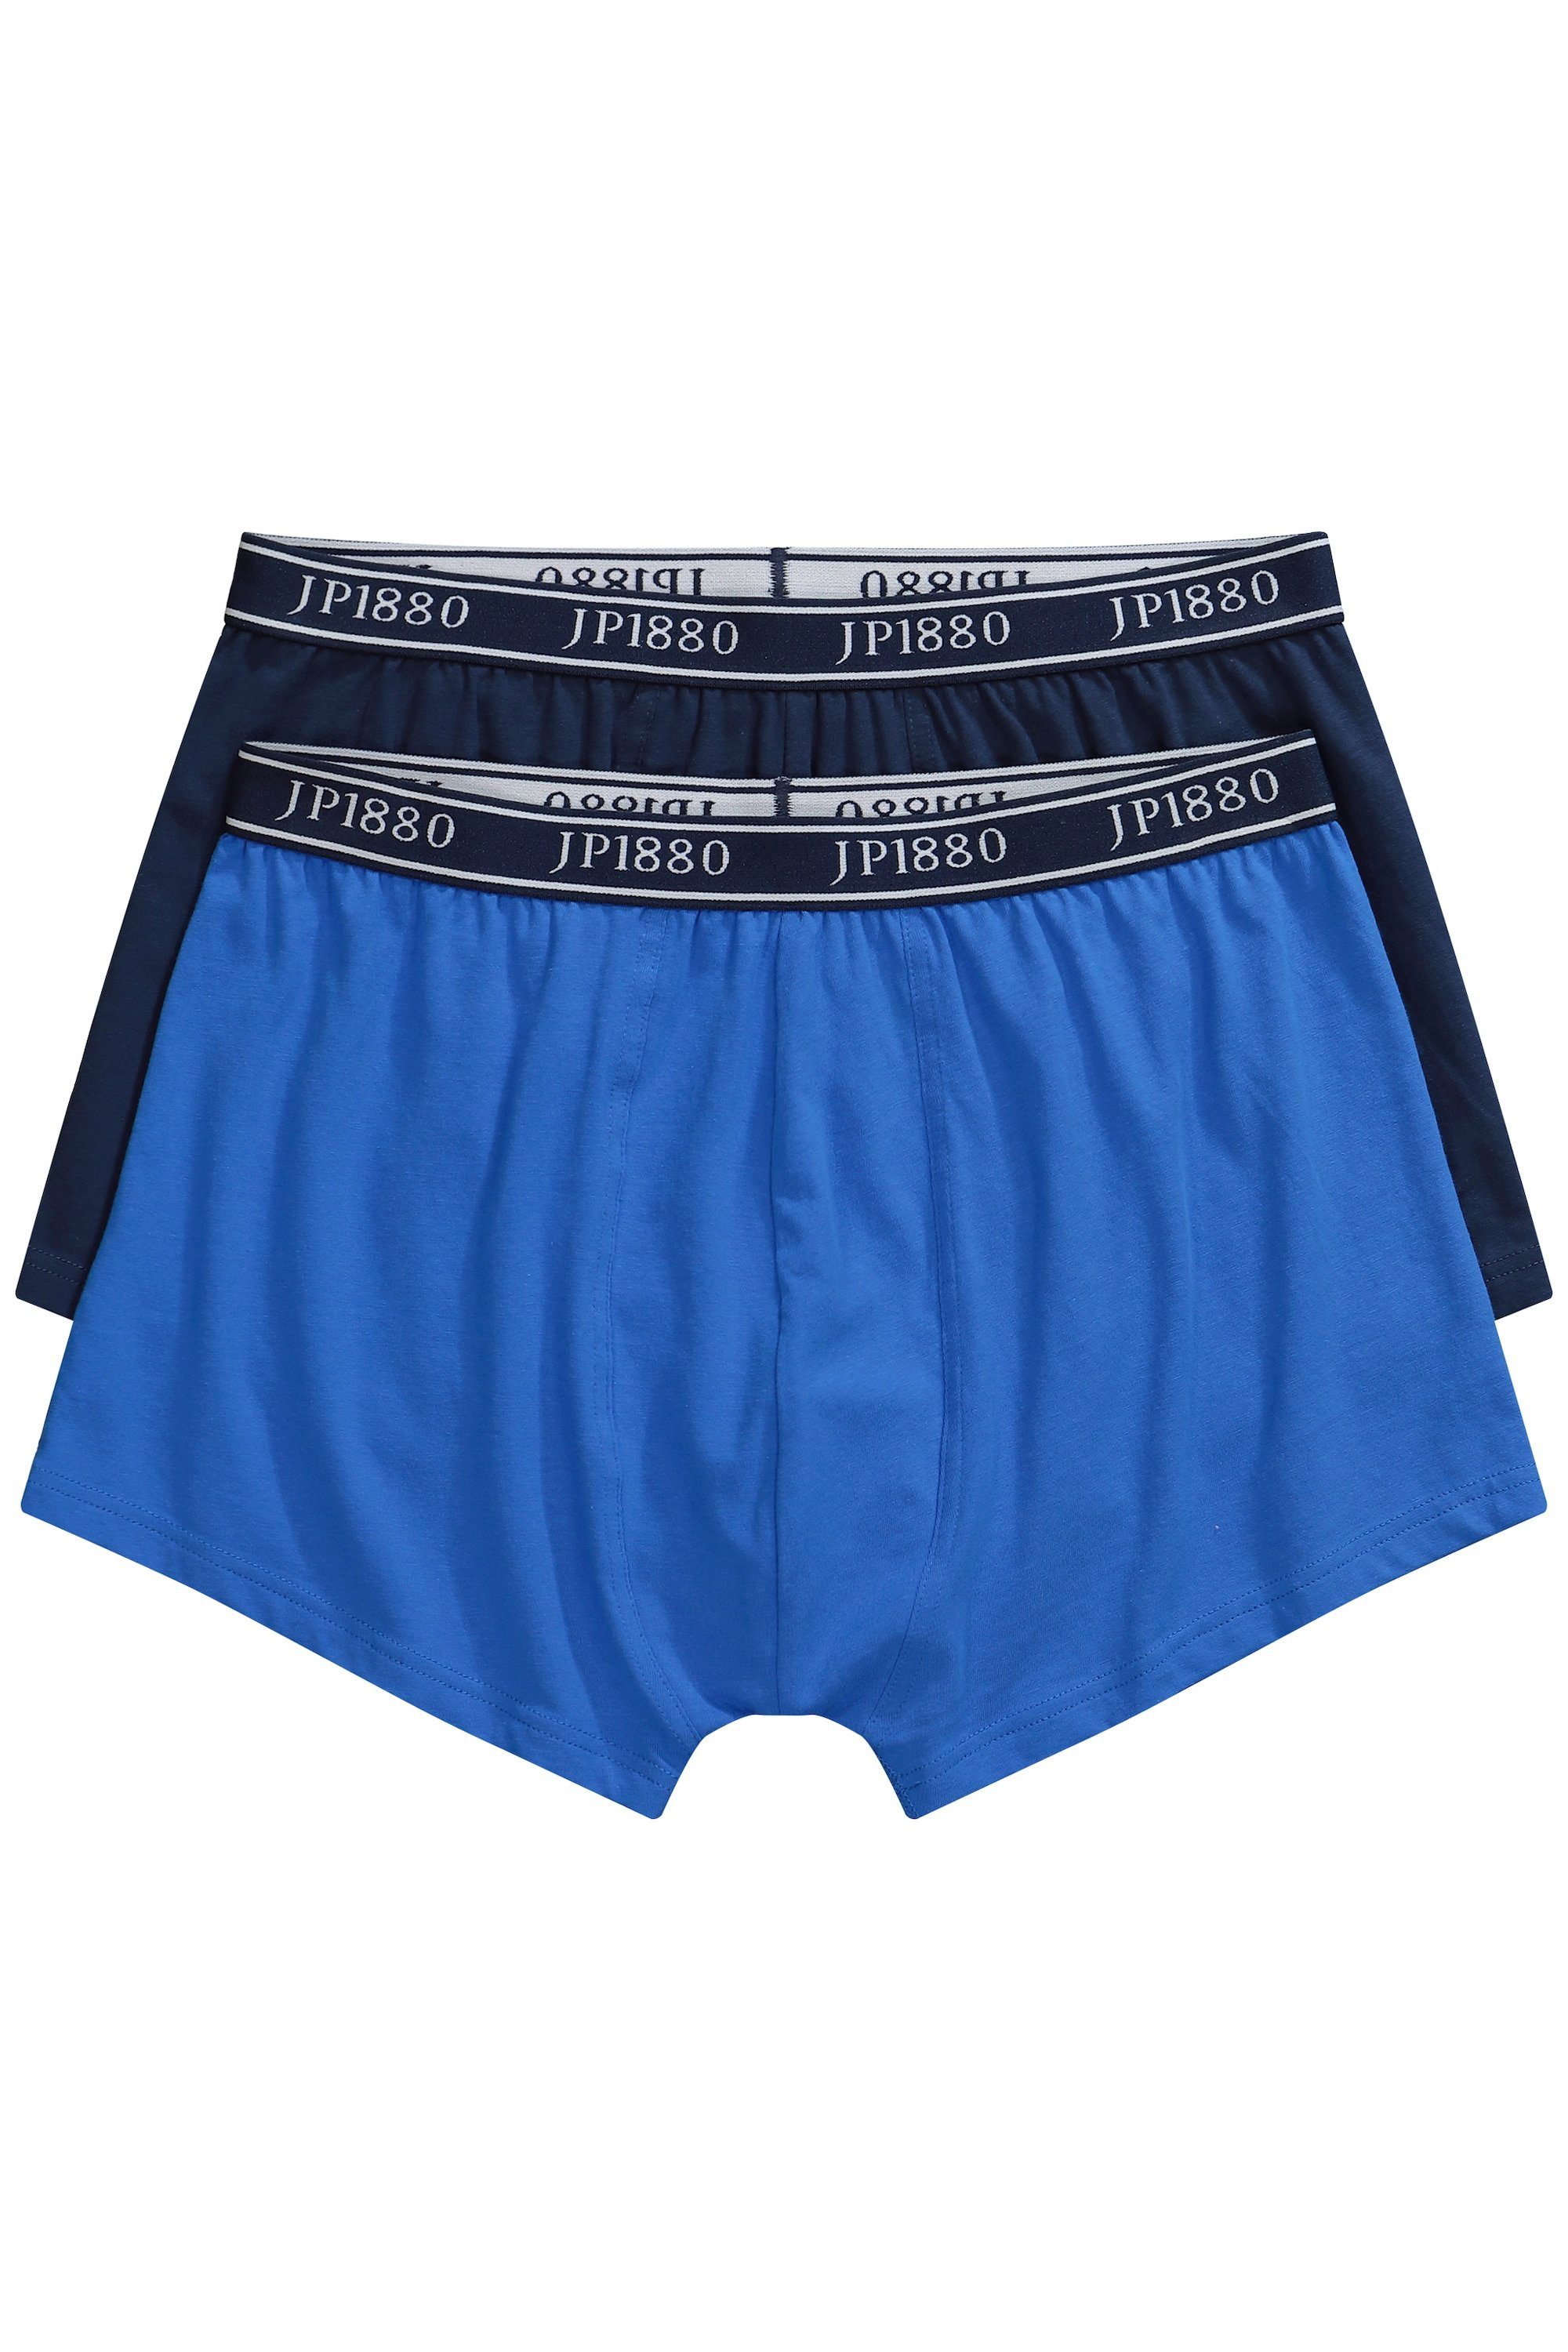 JP1880 Boxershorts Hip-Pants FLEXNAMIC® 2er-Pack Unterhose lapisblau